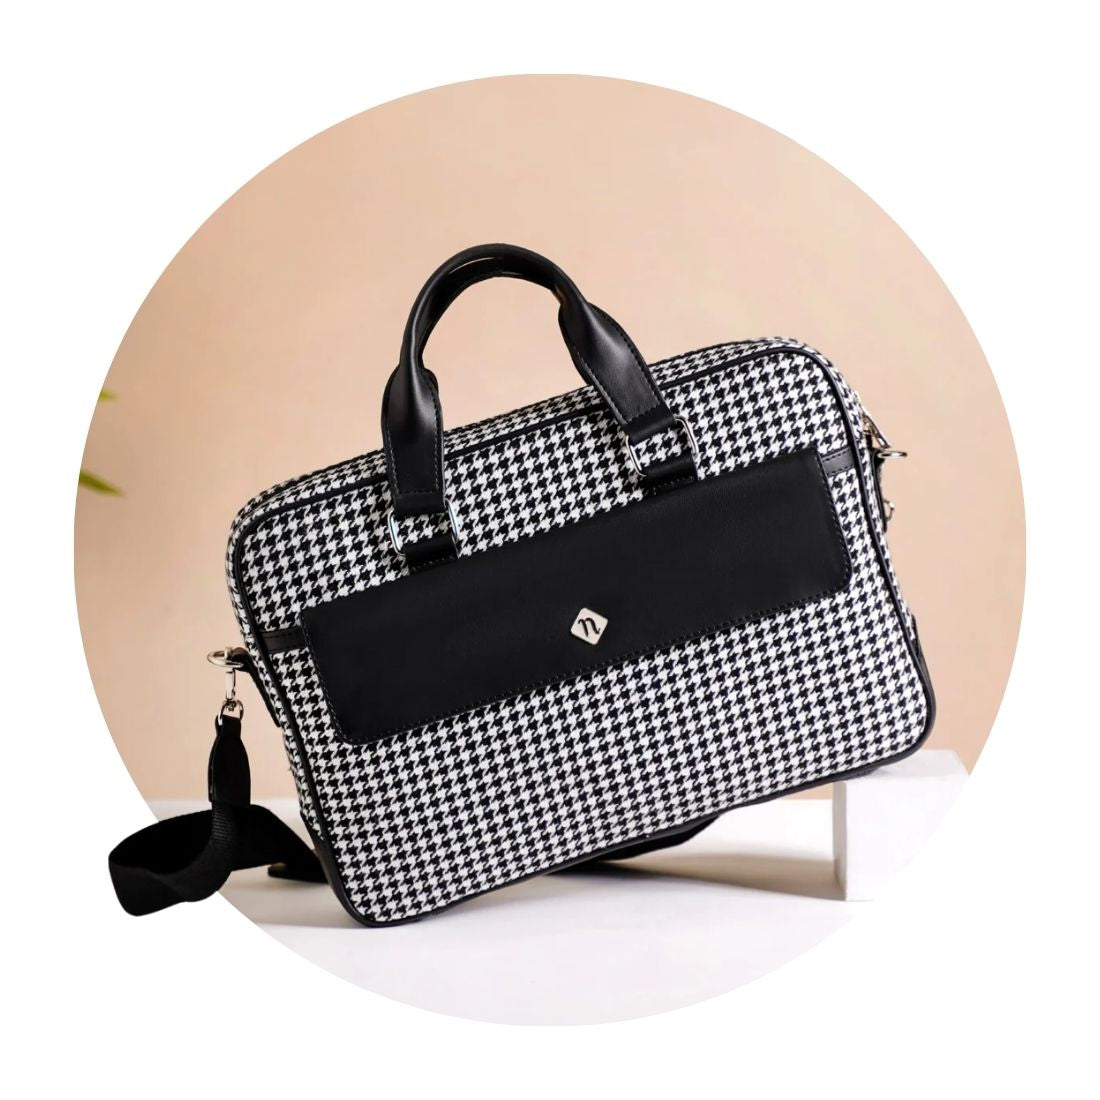 Handbags for Women | Designer Ladies Handbag Online @ Mirraw